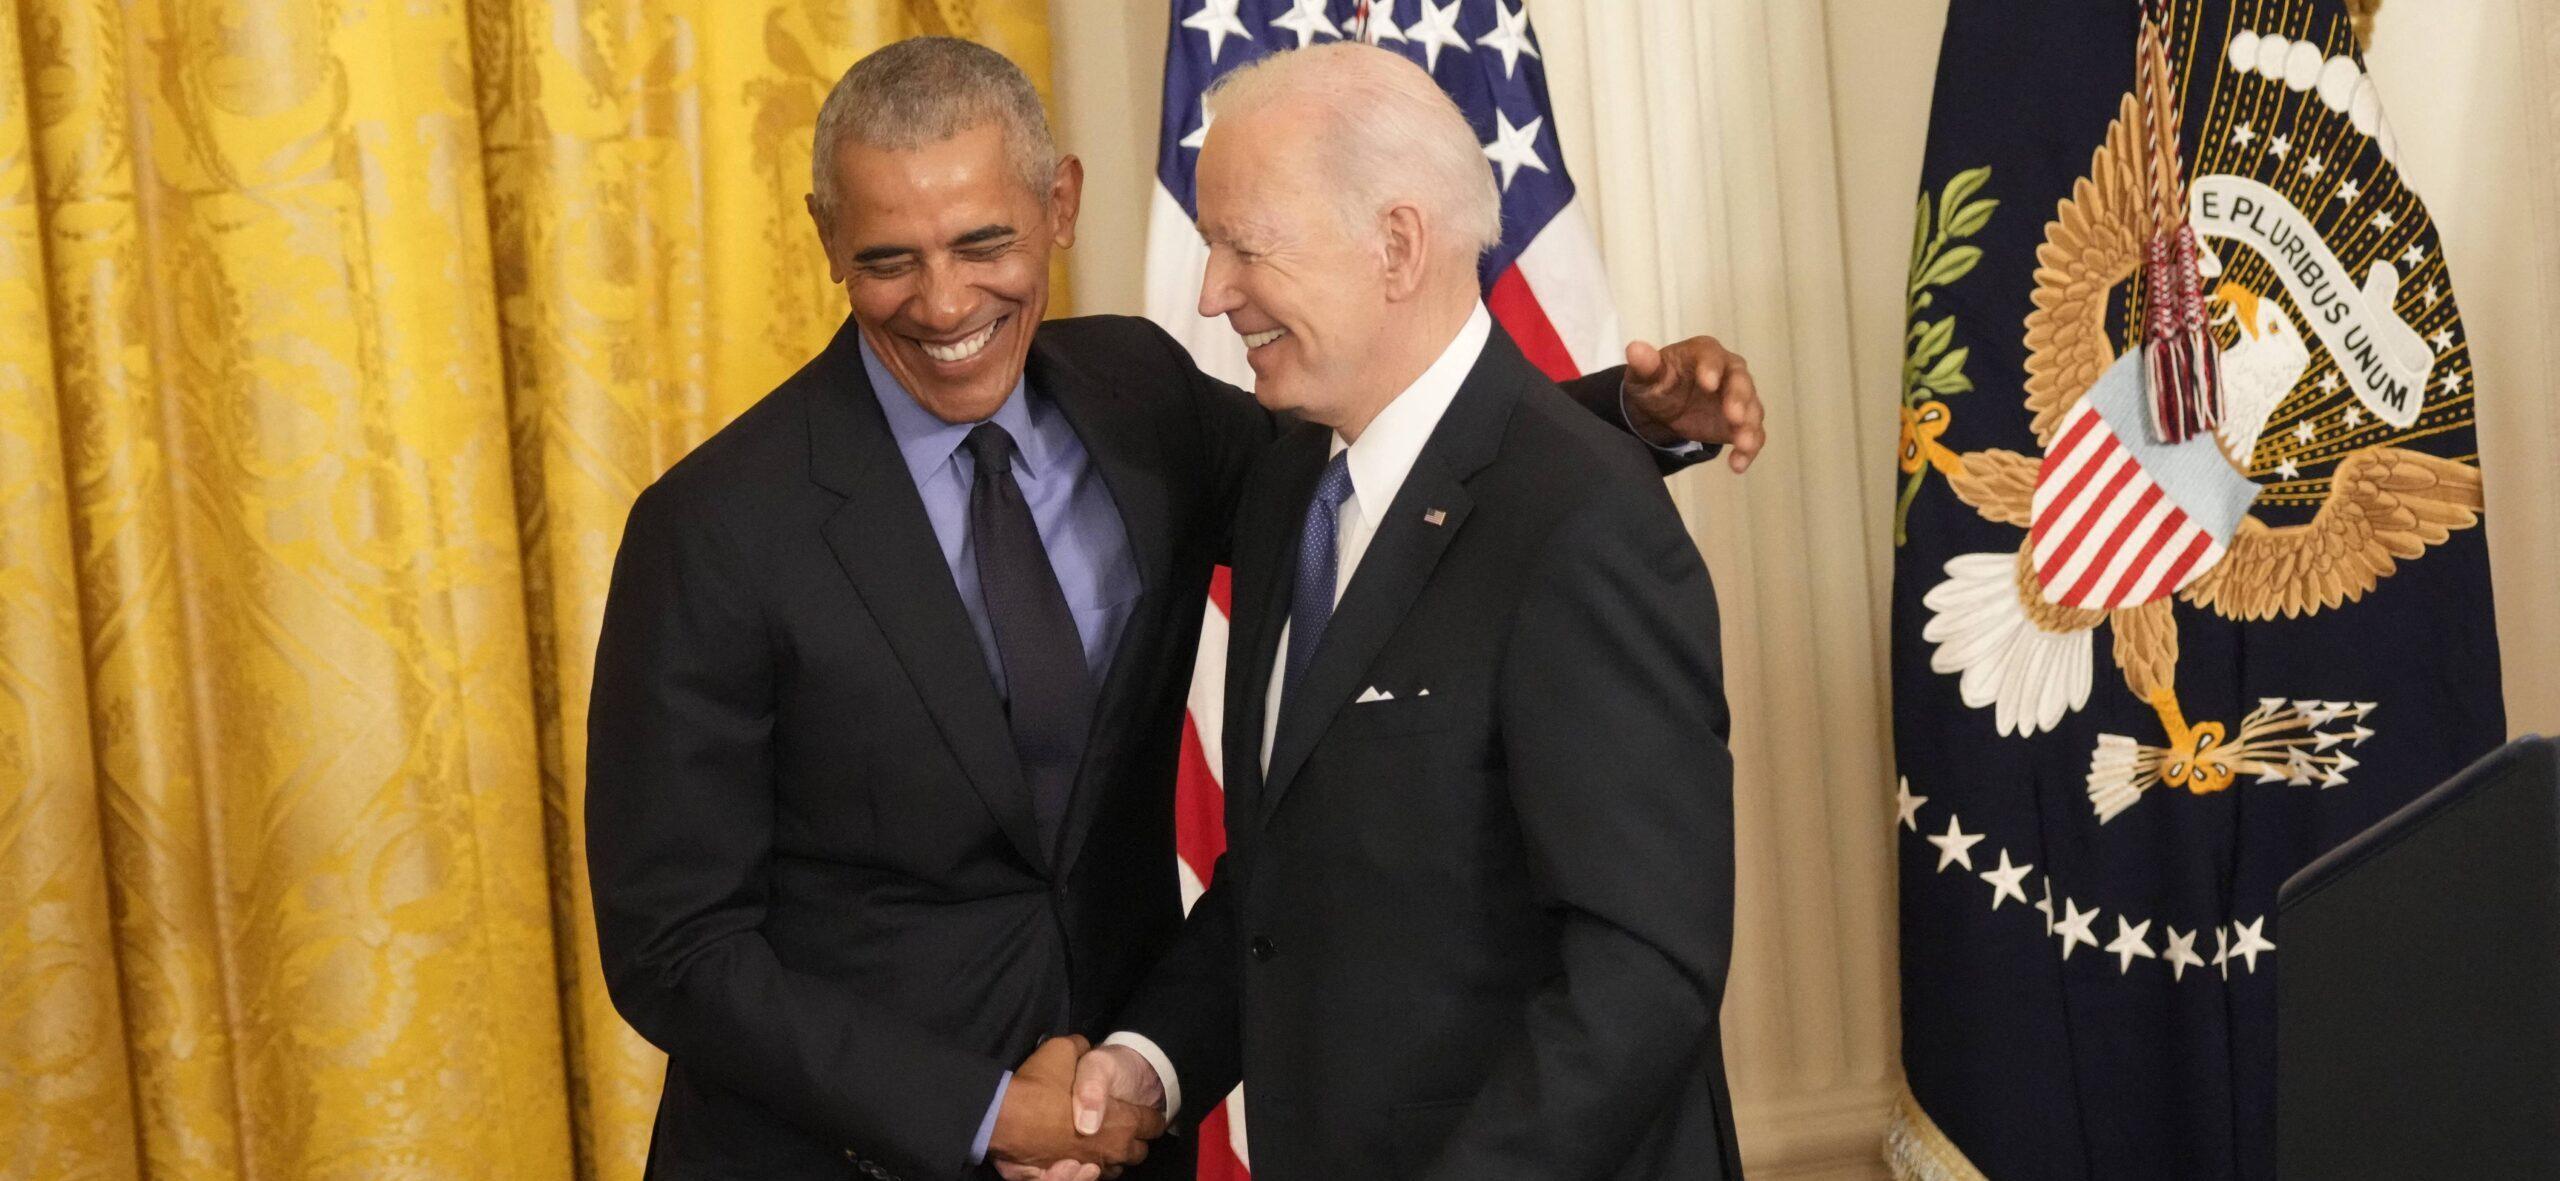 Barack Obama and Joe Biden shaking hands